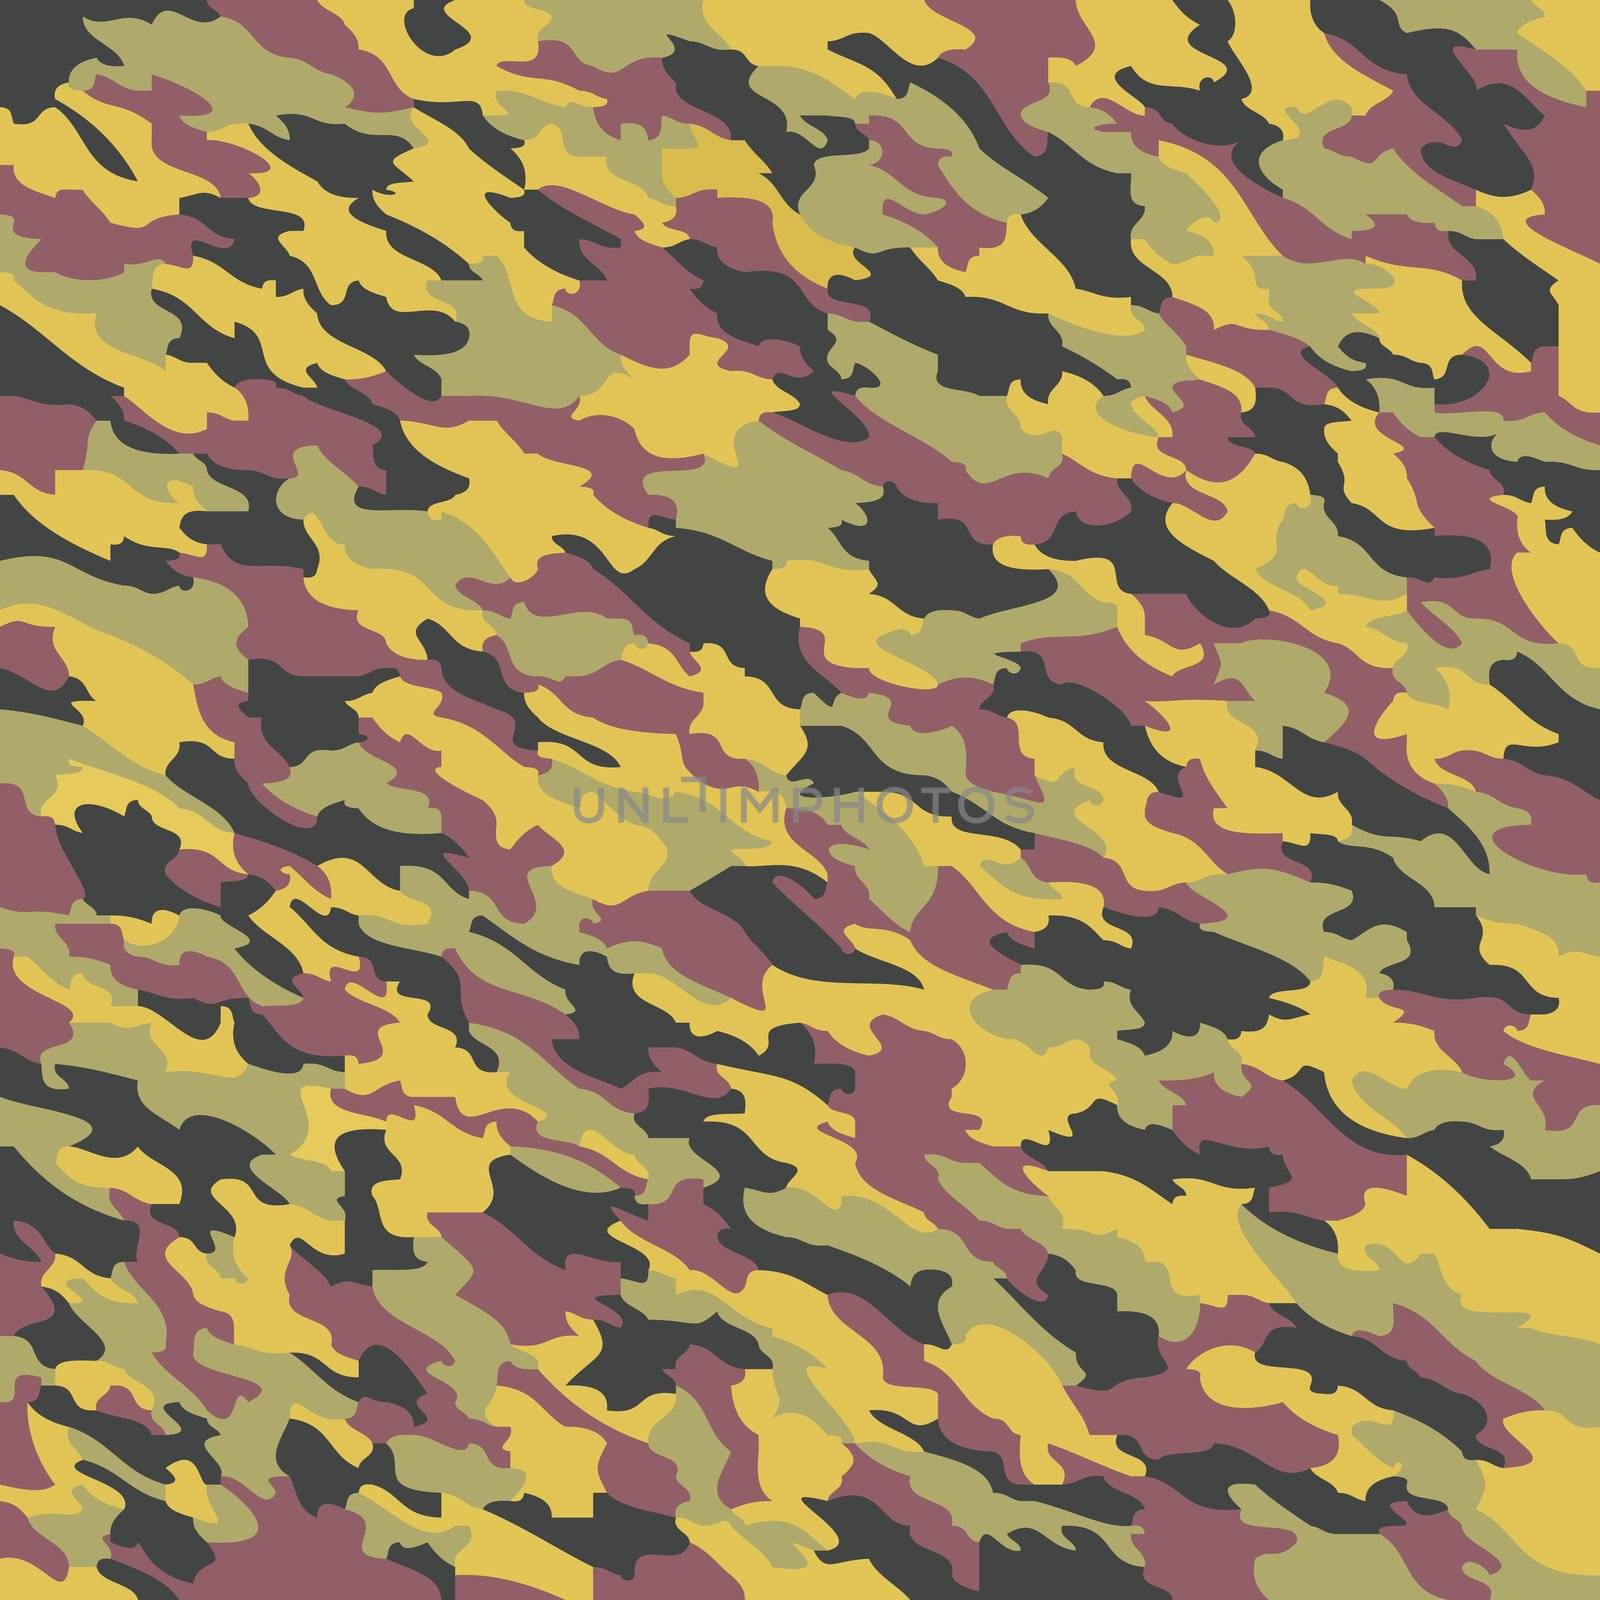 camouflage texture, abstract art illustration